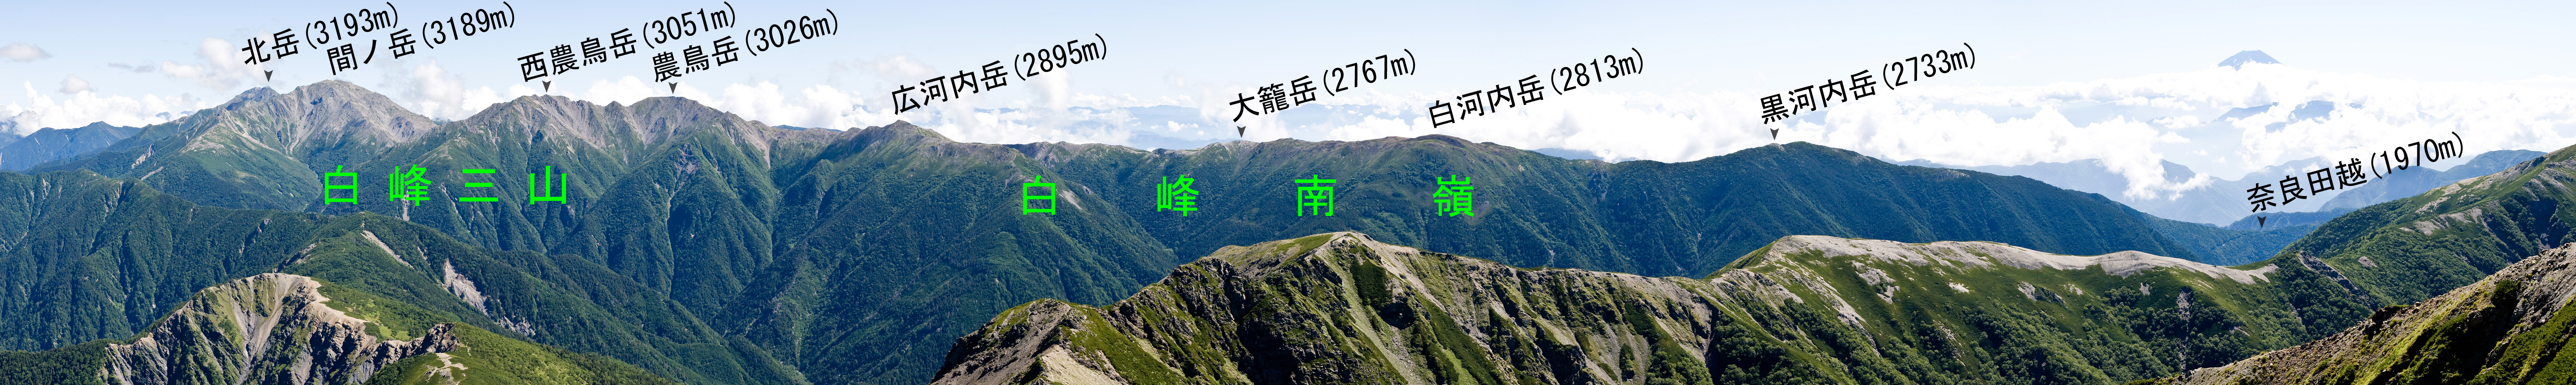 File Shirane Range From Mt Shiomidake 01 2 Jpg Wikimedia Commons